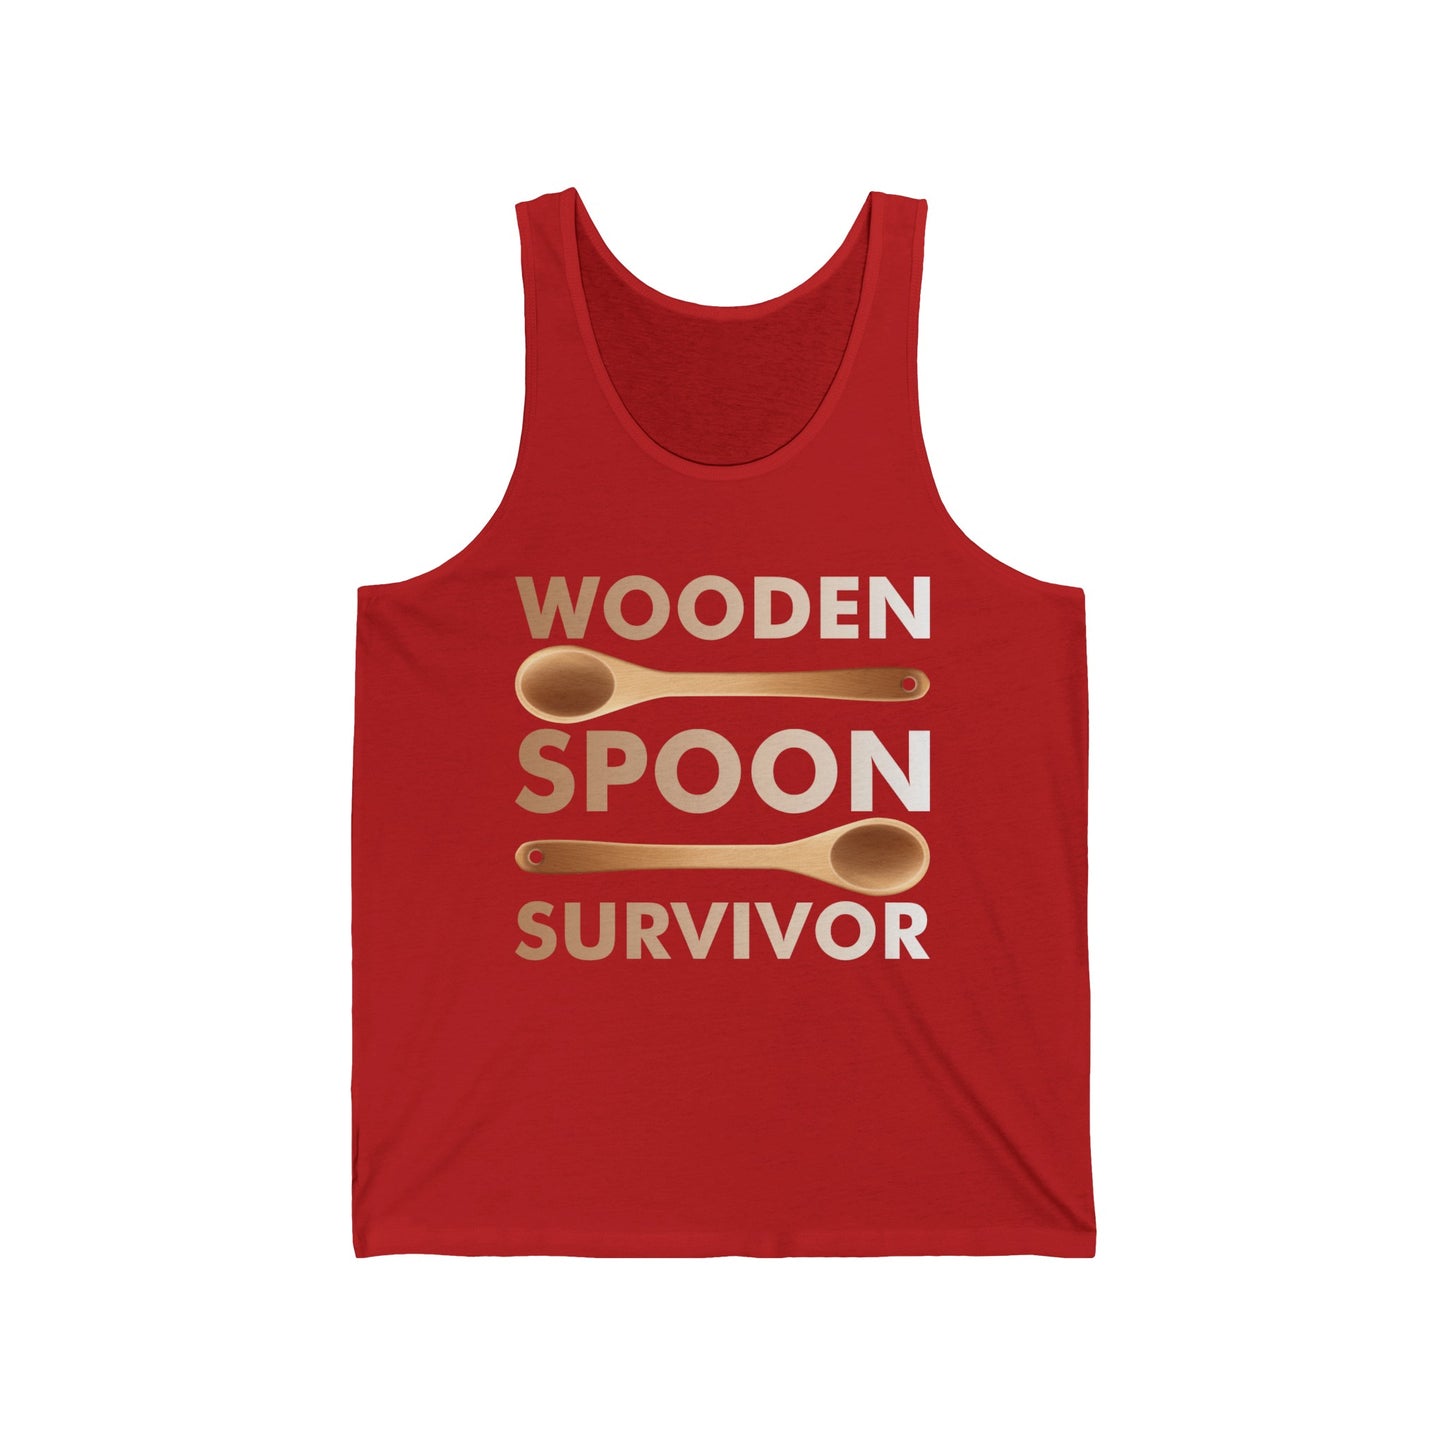 Funny Wooden Spoon Survivor Retro Novelty Sarcastic Tank Tops For Men Women